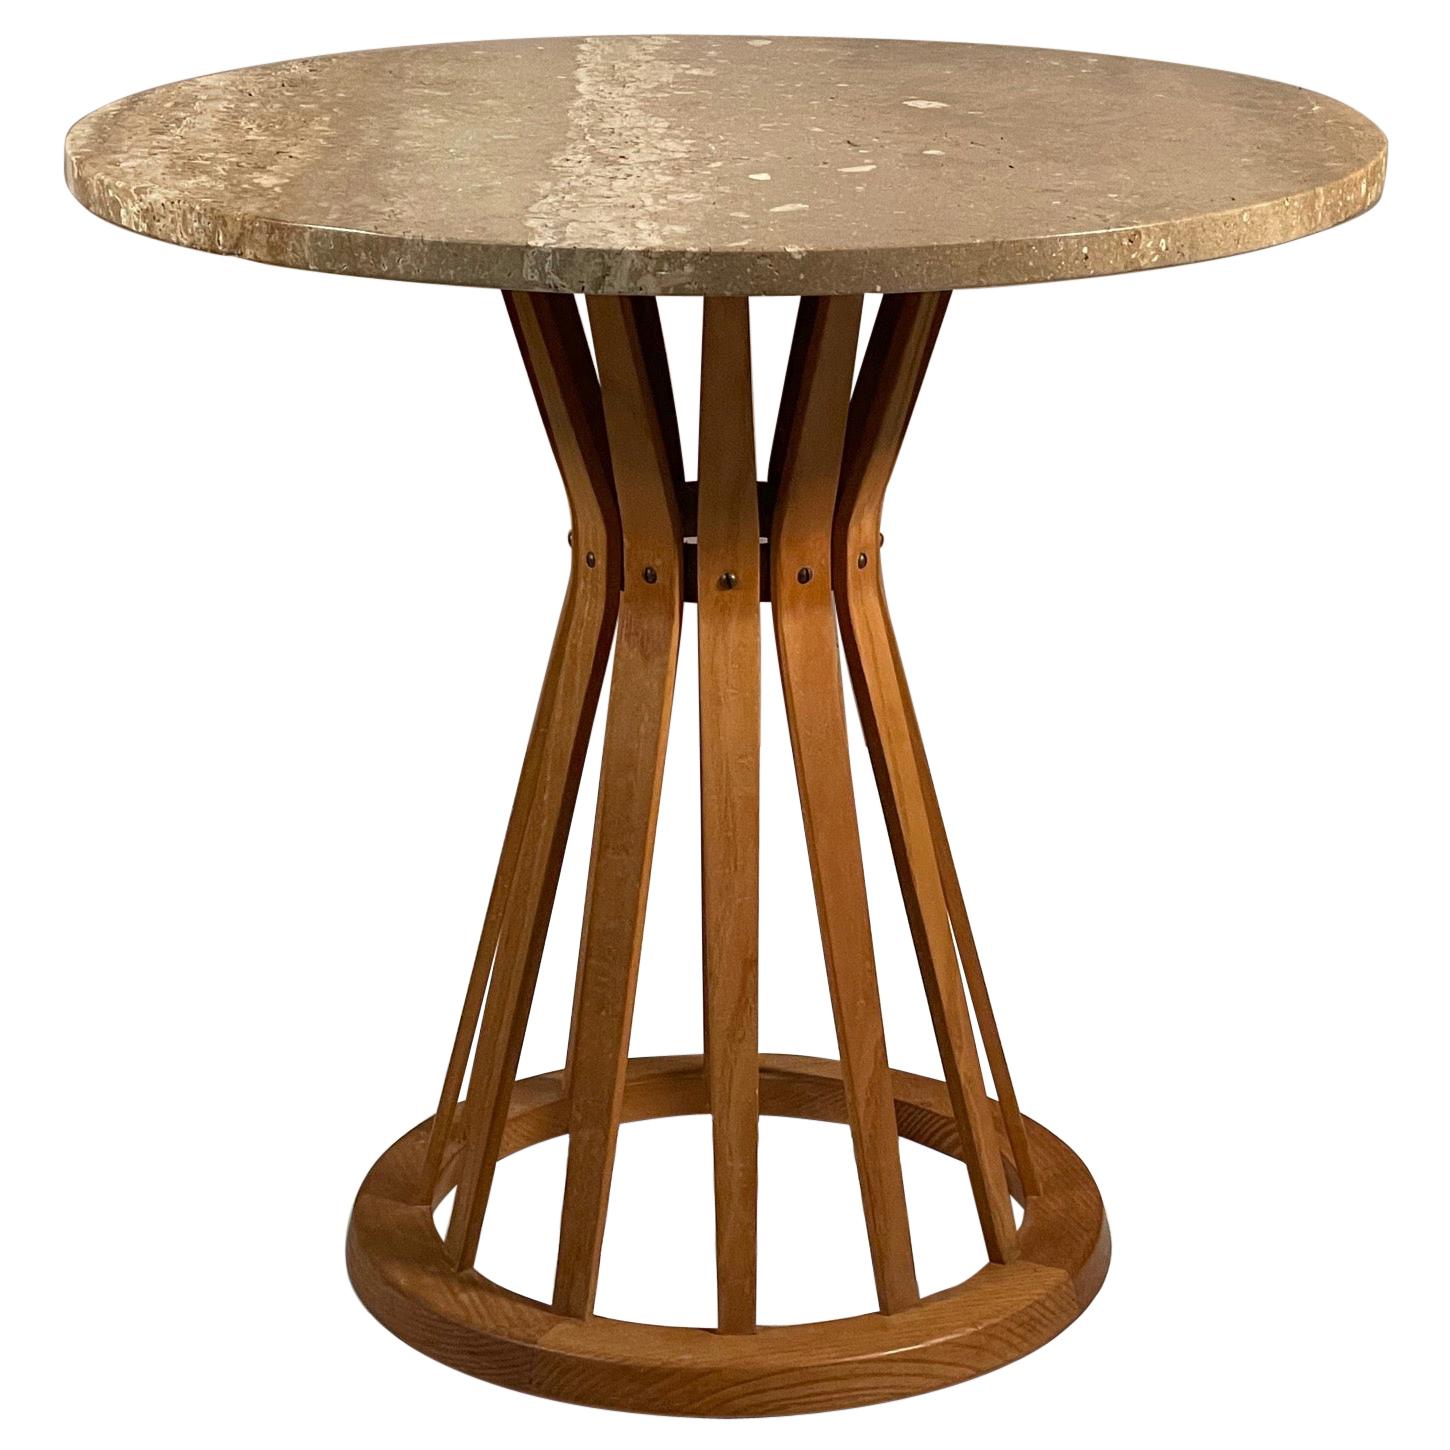 Dunbar Sheaf of Wheat Pedestal Table